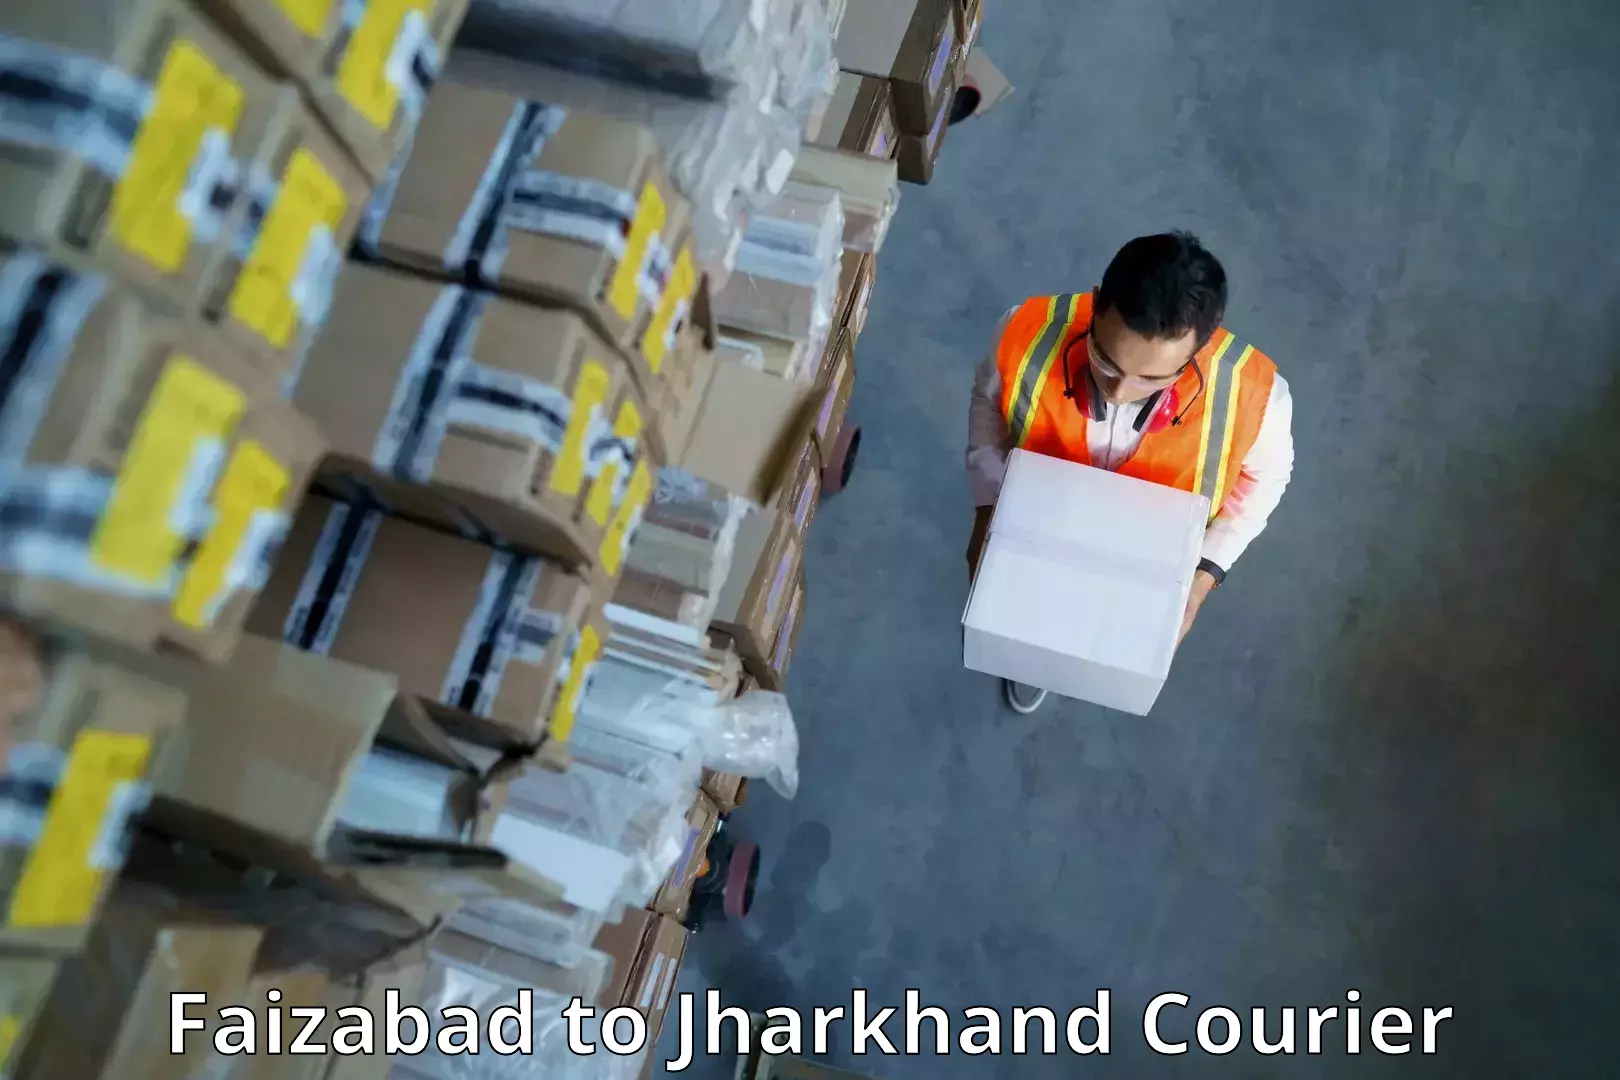 Global logistics network Faizabad to Padma Hazaribagh